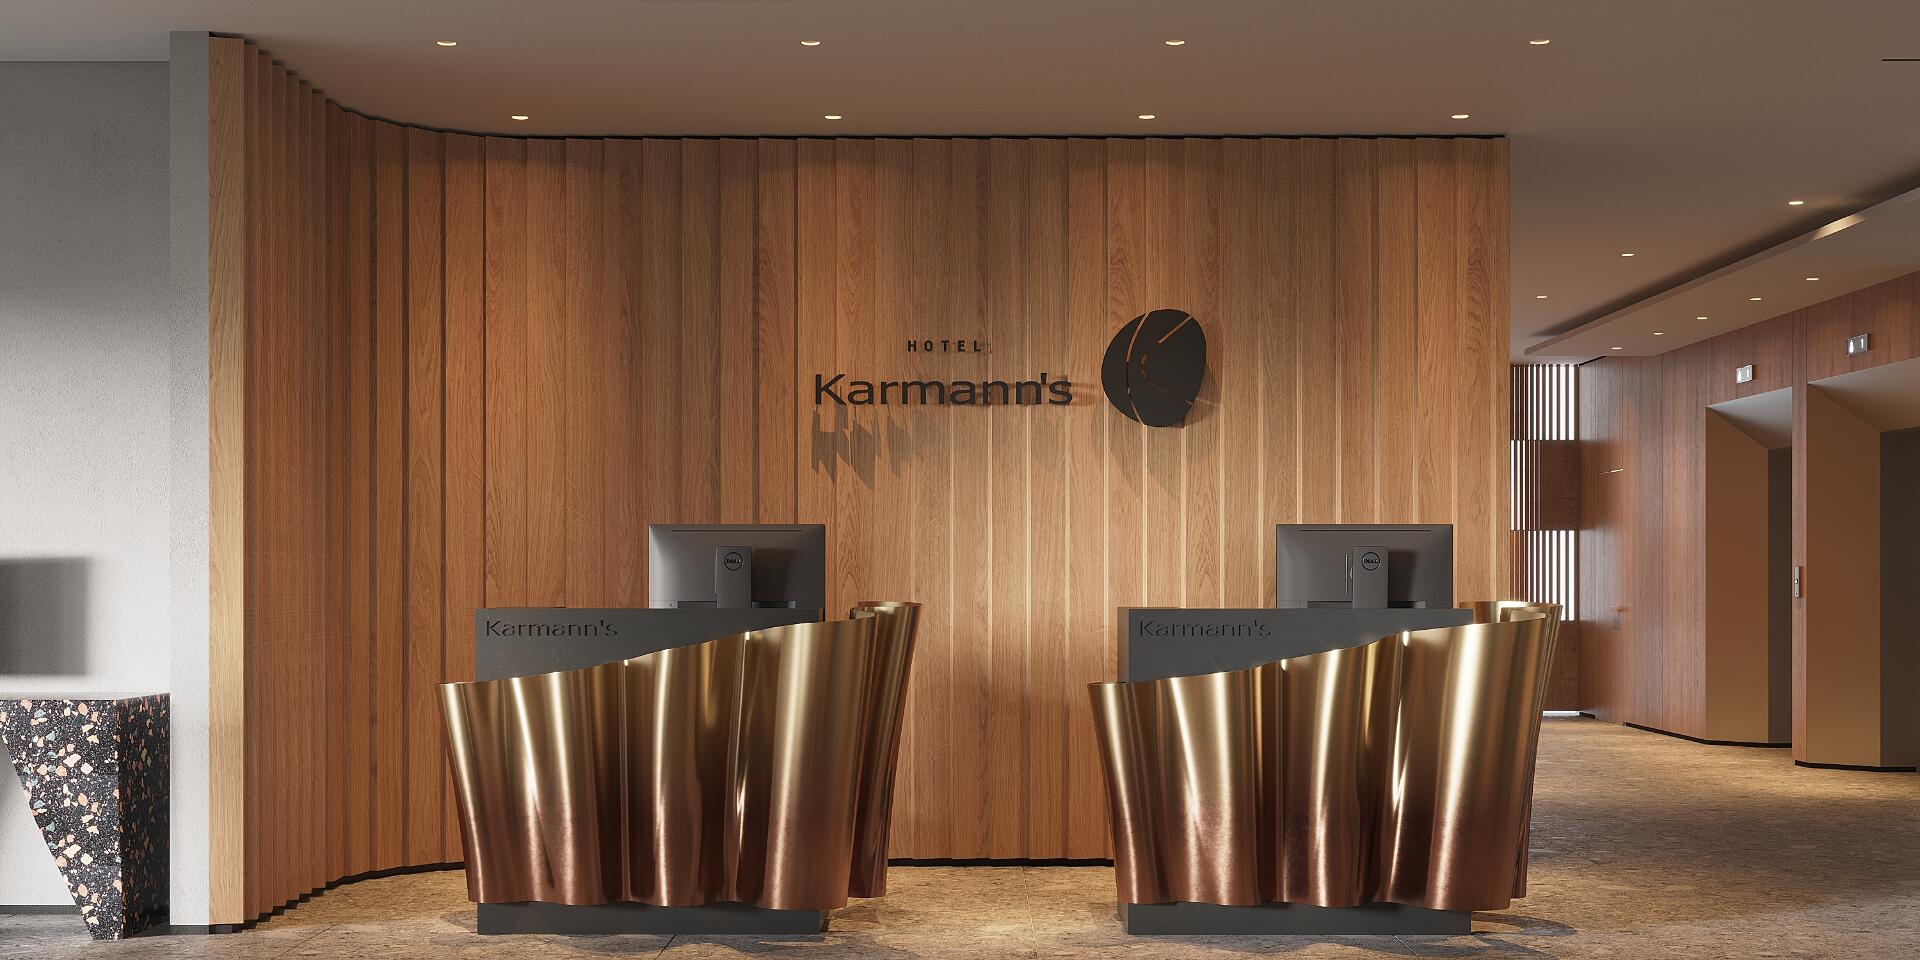 Karmann's hotel